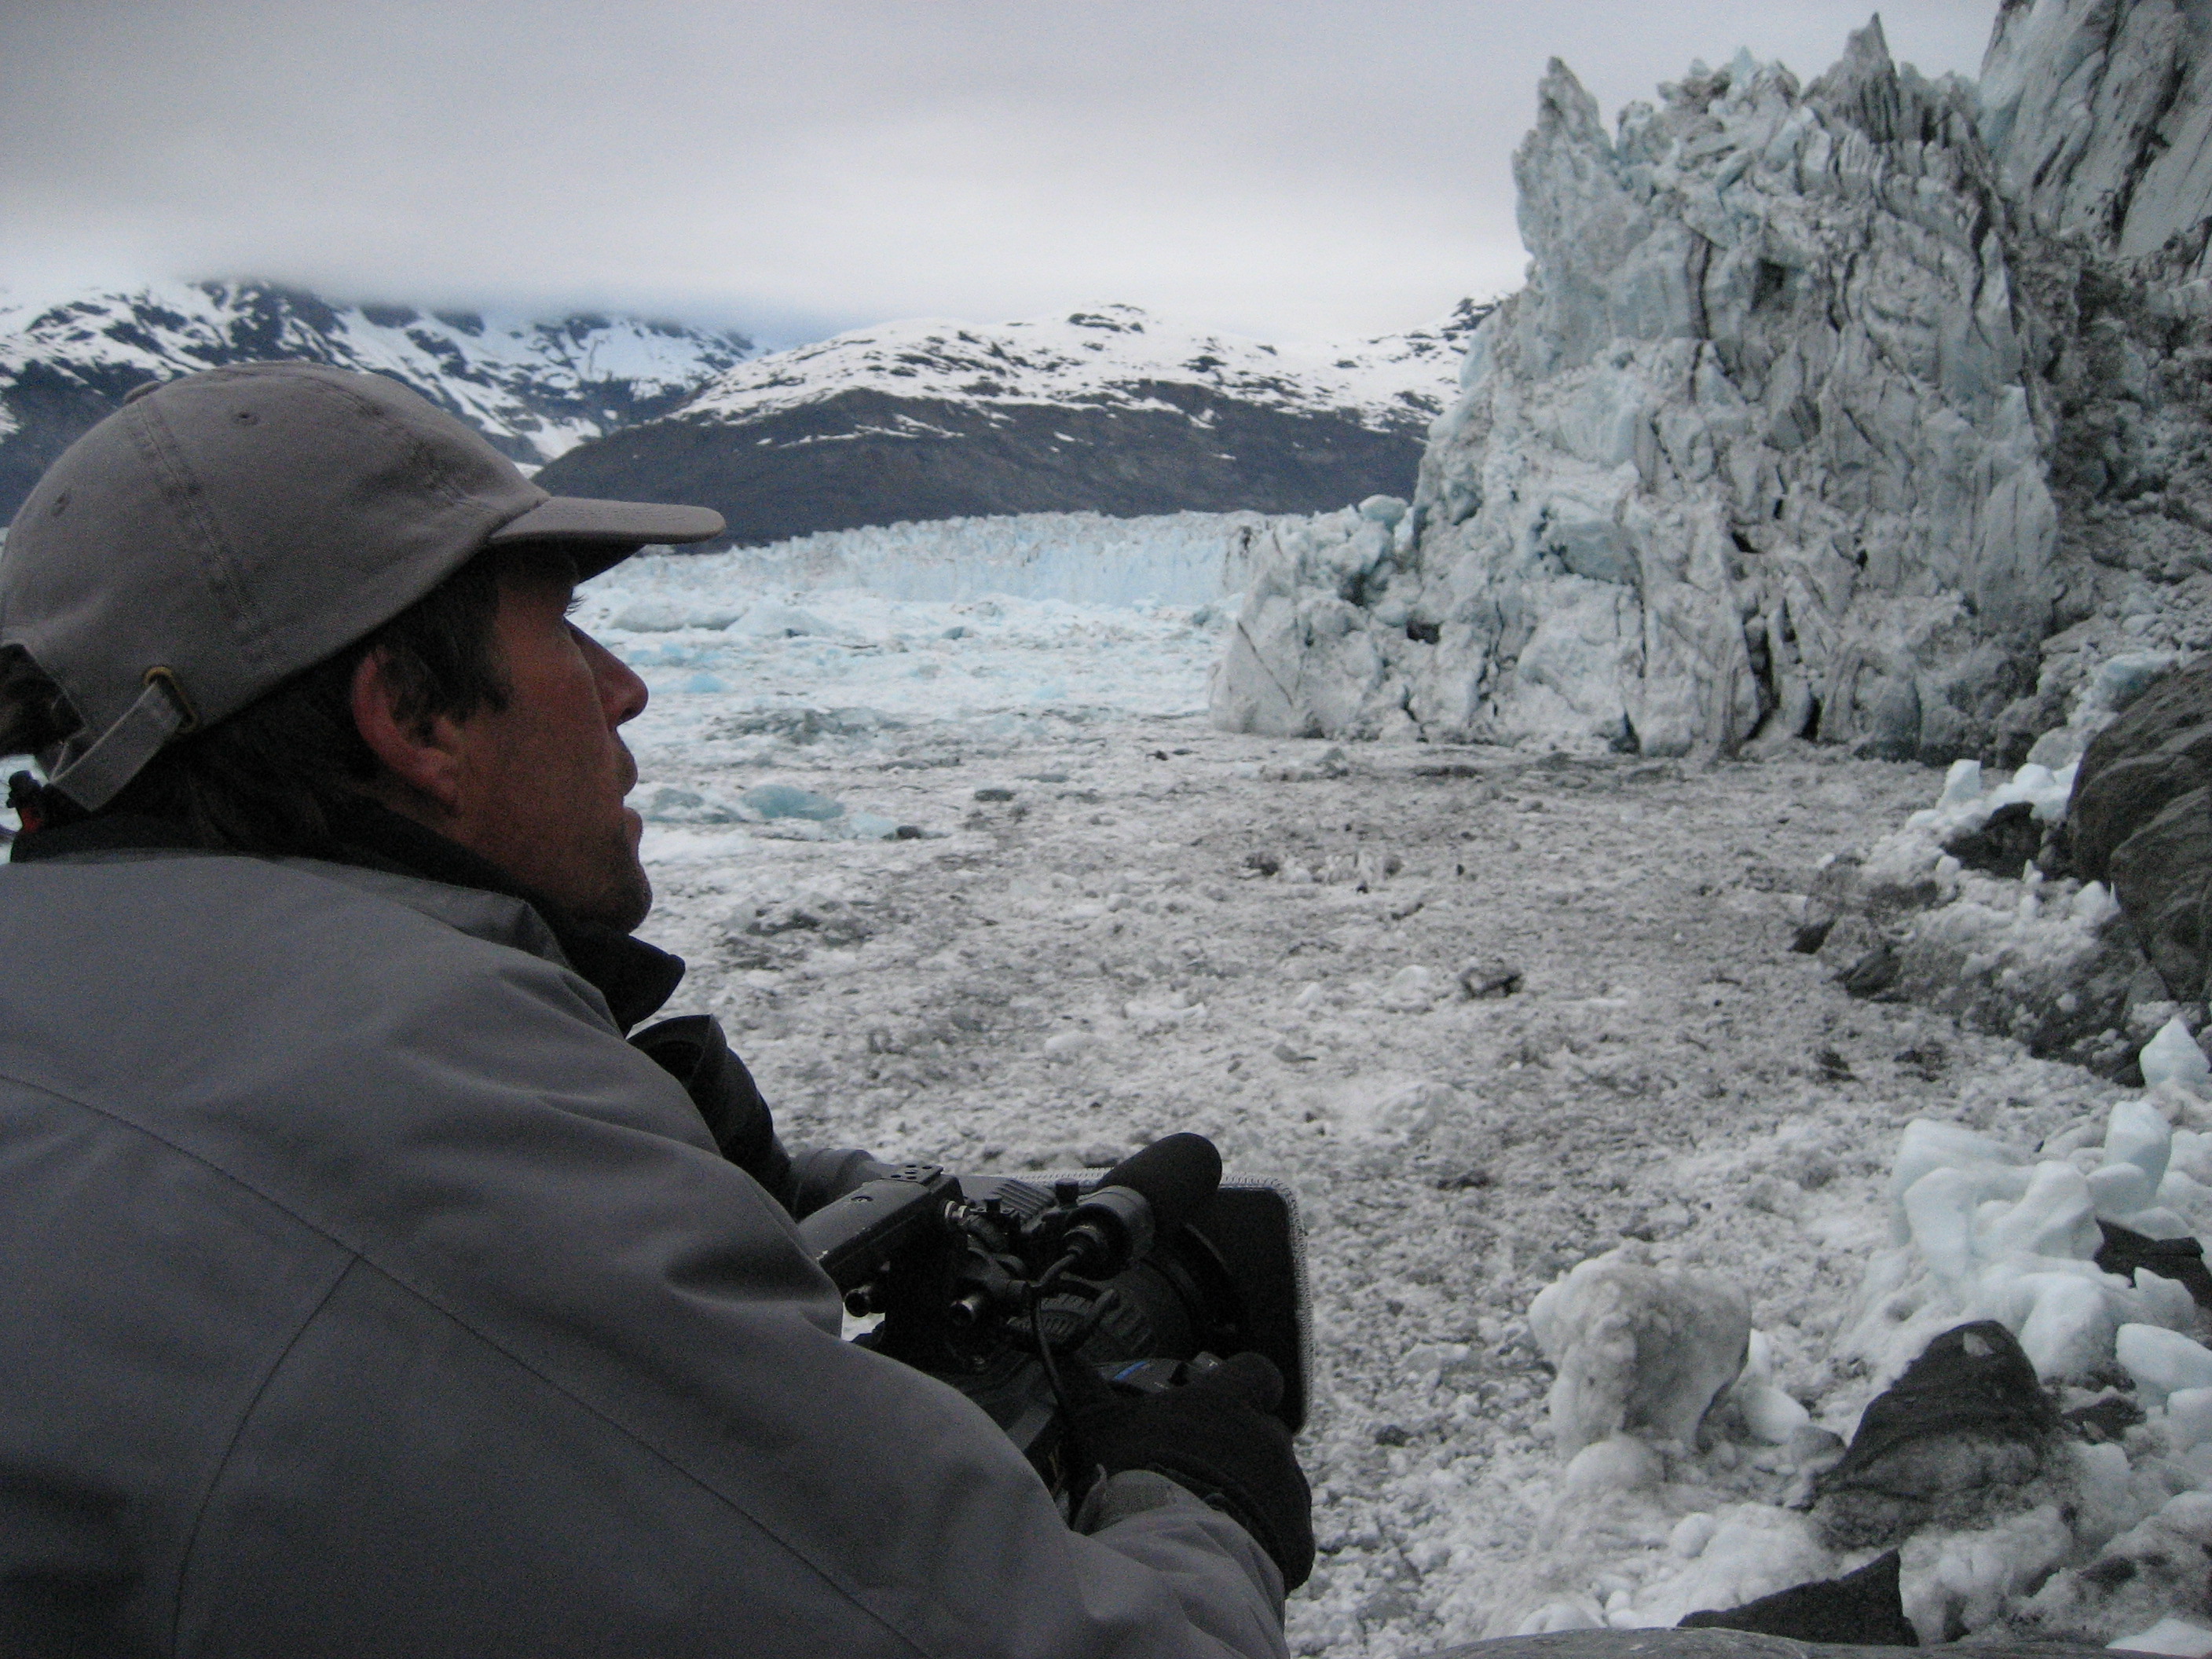 Location: Columbia Glacier for Extreme Ice, PBS NOVA